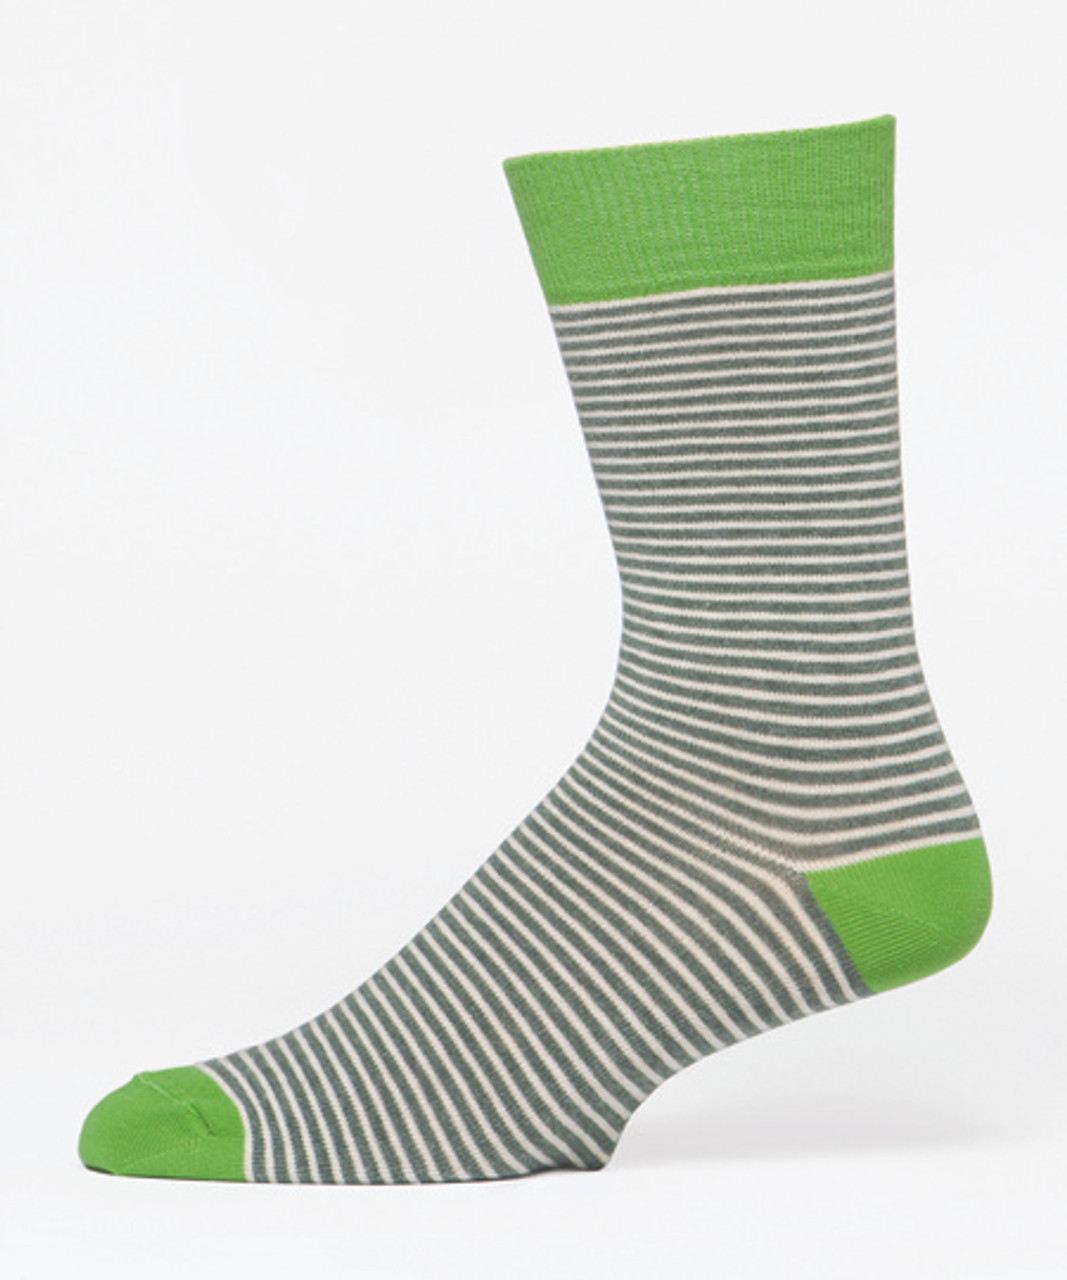 Kale Railroad Stripe Men's Crew Socks - Solne Eco Department Store